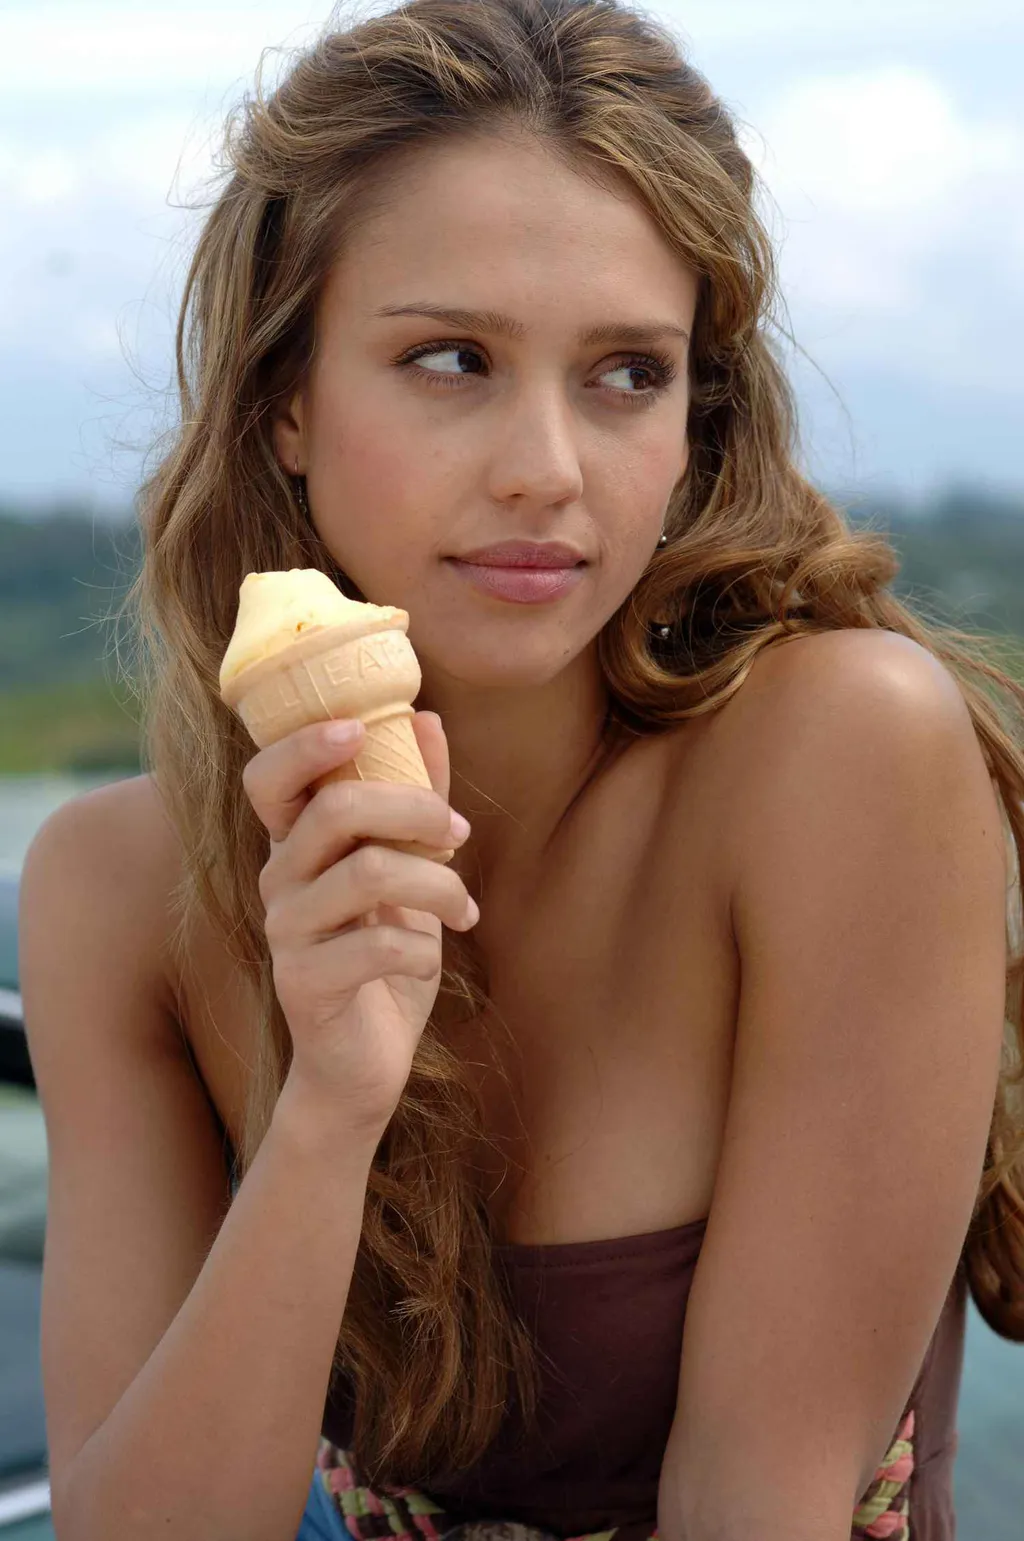 Good luck Chuck (2007) USA/ Canada Cinema crčme glacée glace SORBET ice cream (aliment food) VERTICAL 